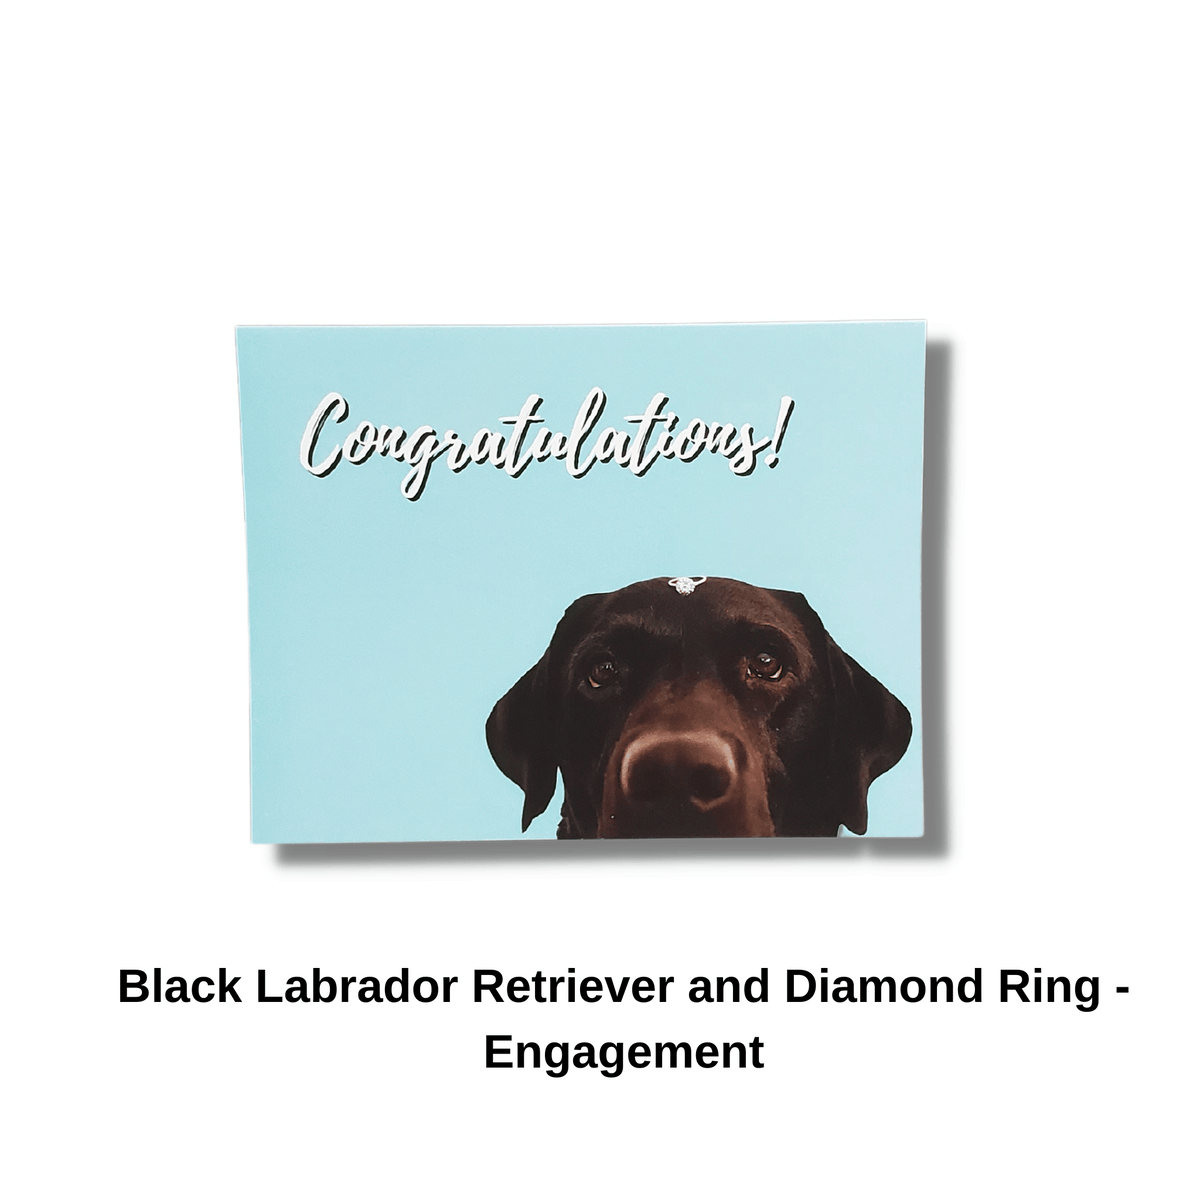 Black Lab Engagement Card